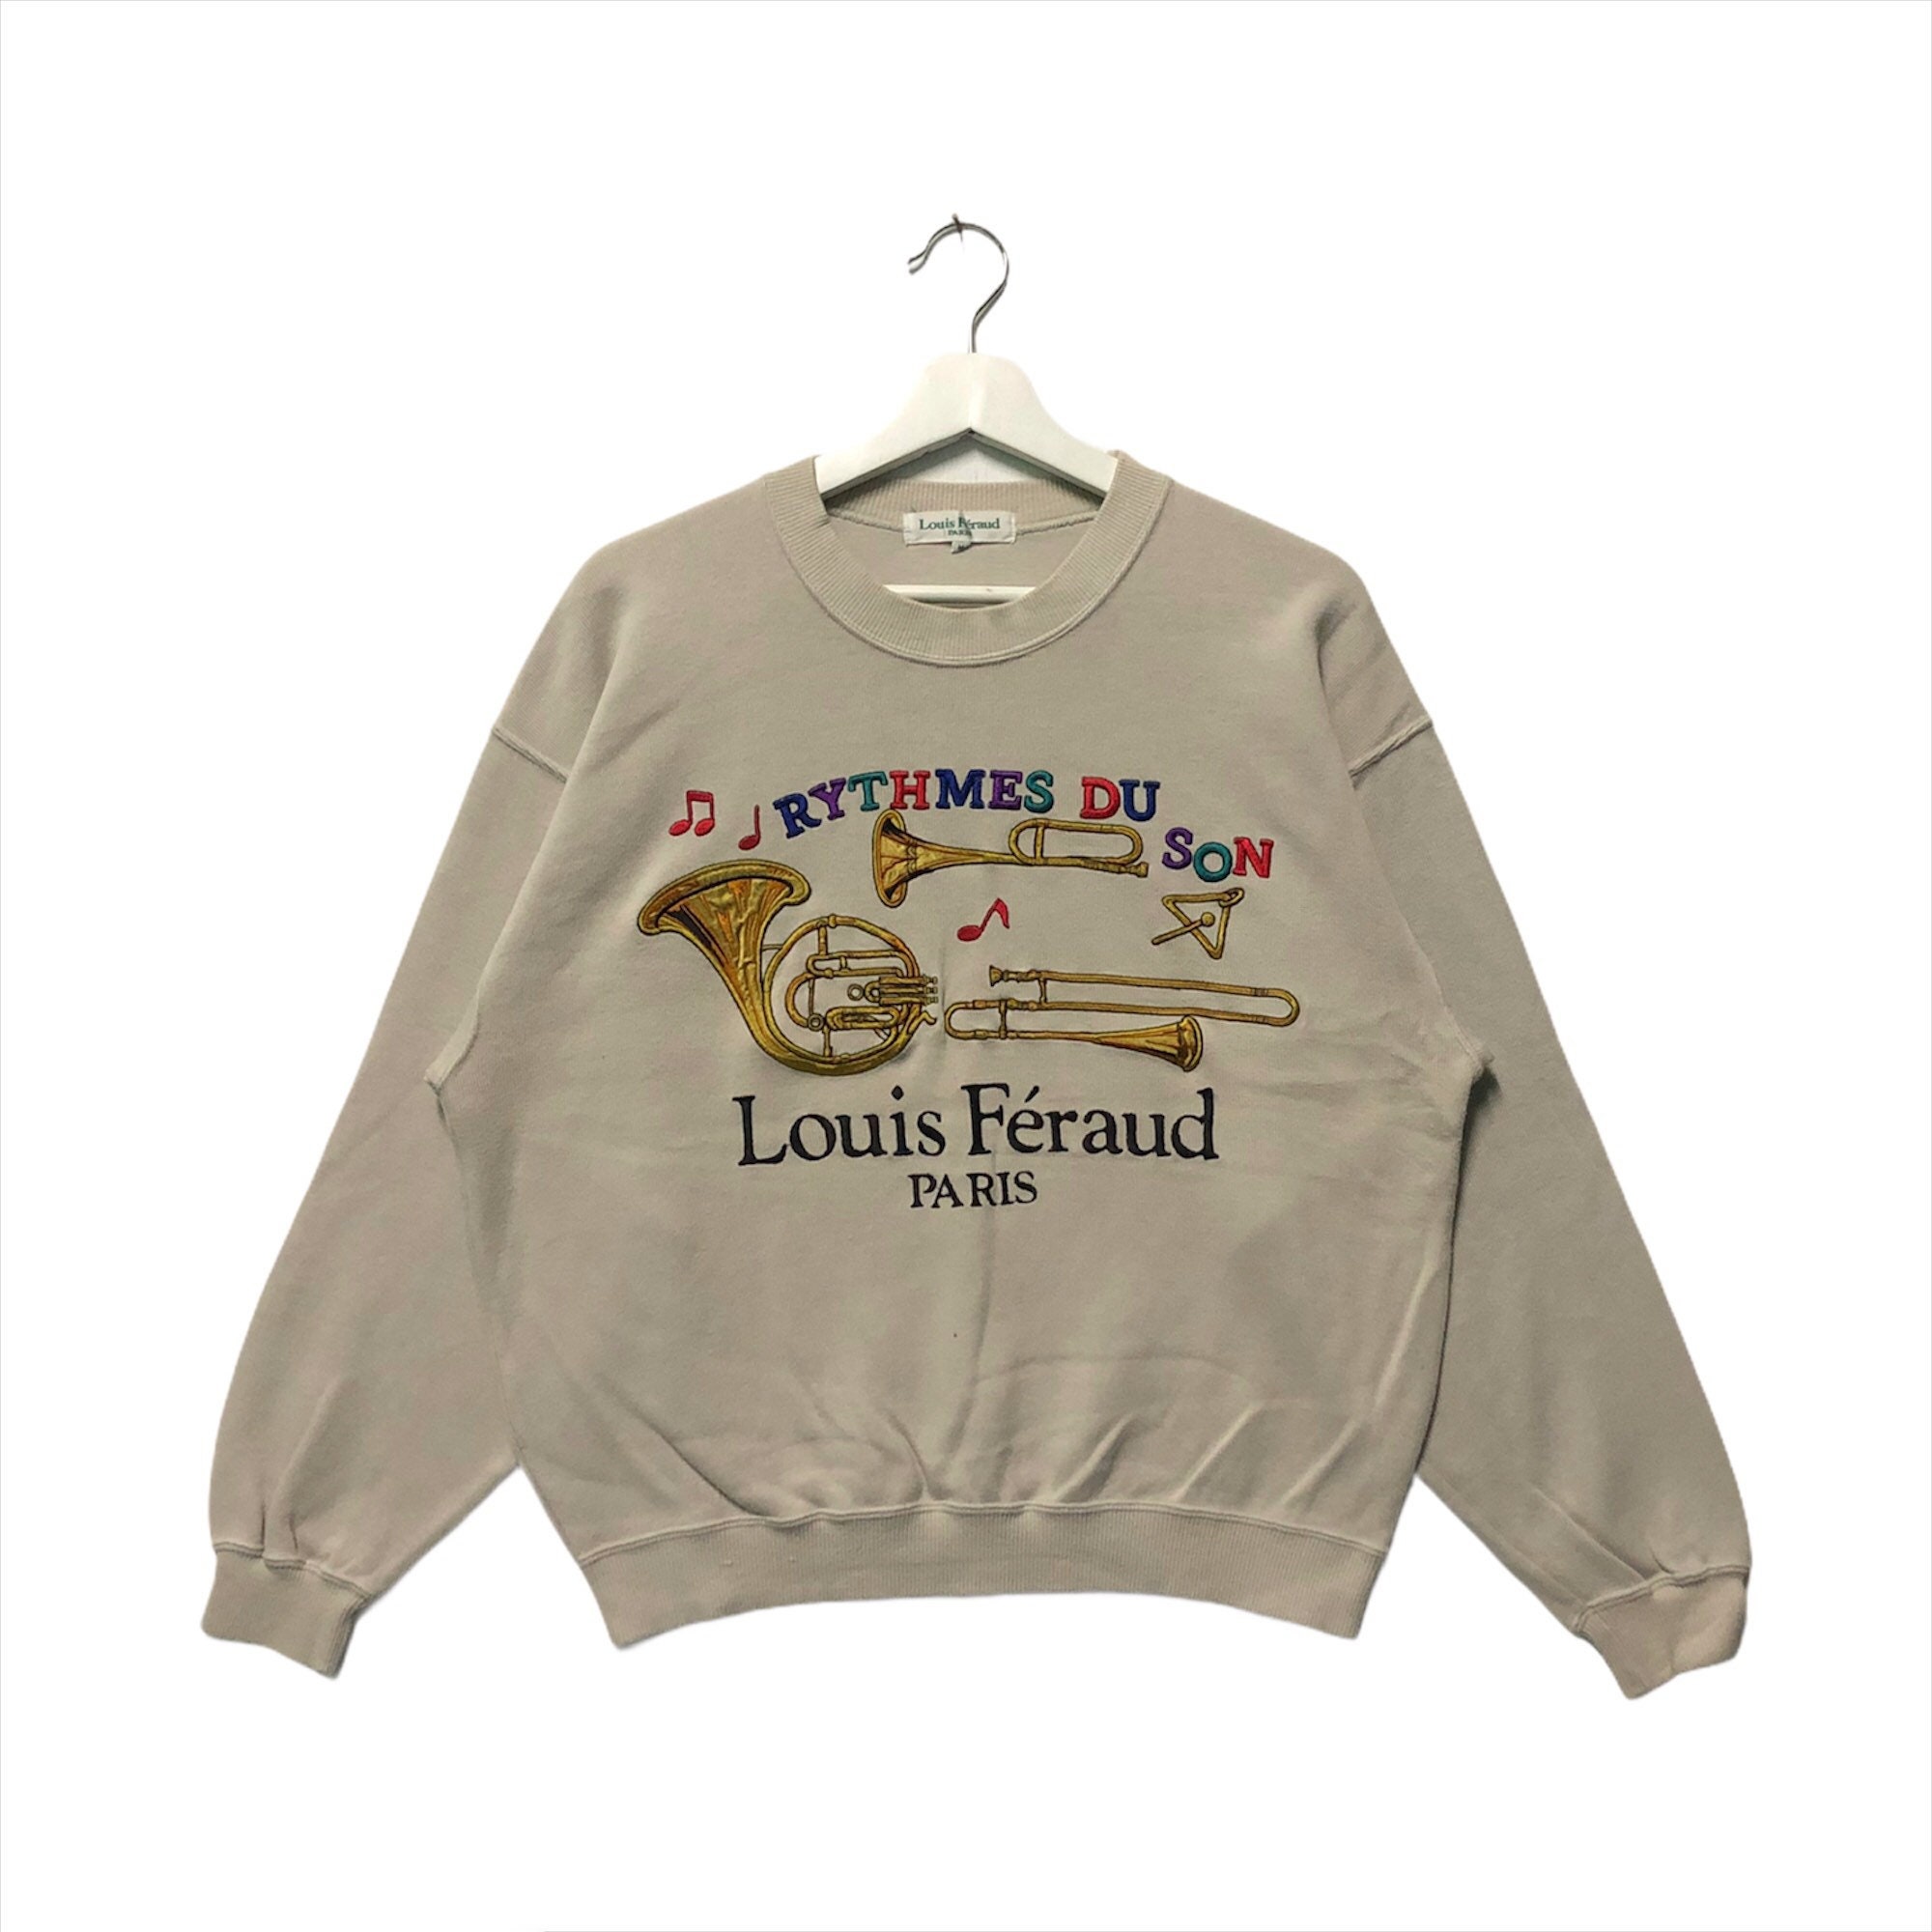 Buy Vintage Louis Feraud Paris Sweatshirt Embroidery Big Logo Online in  India 